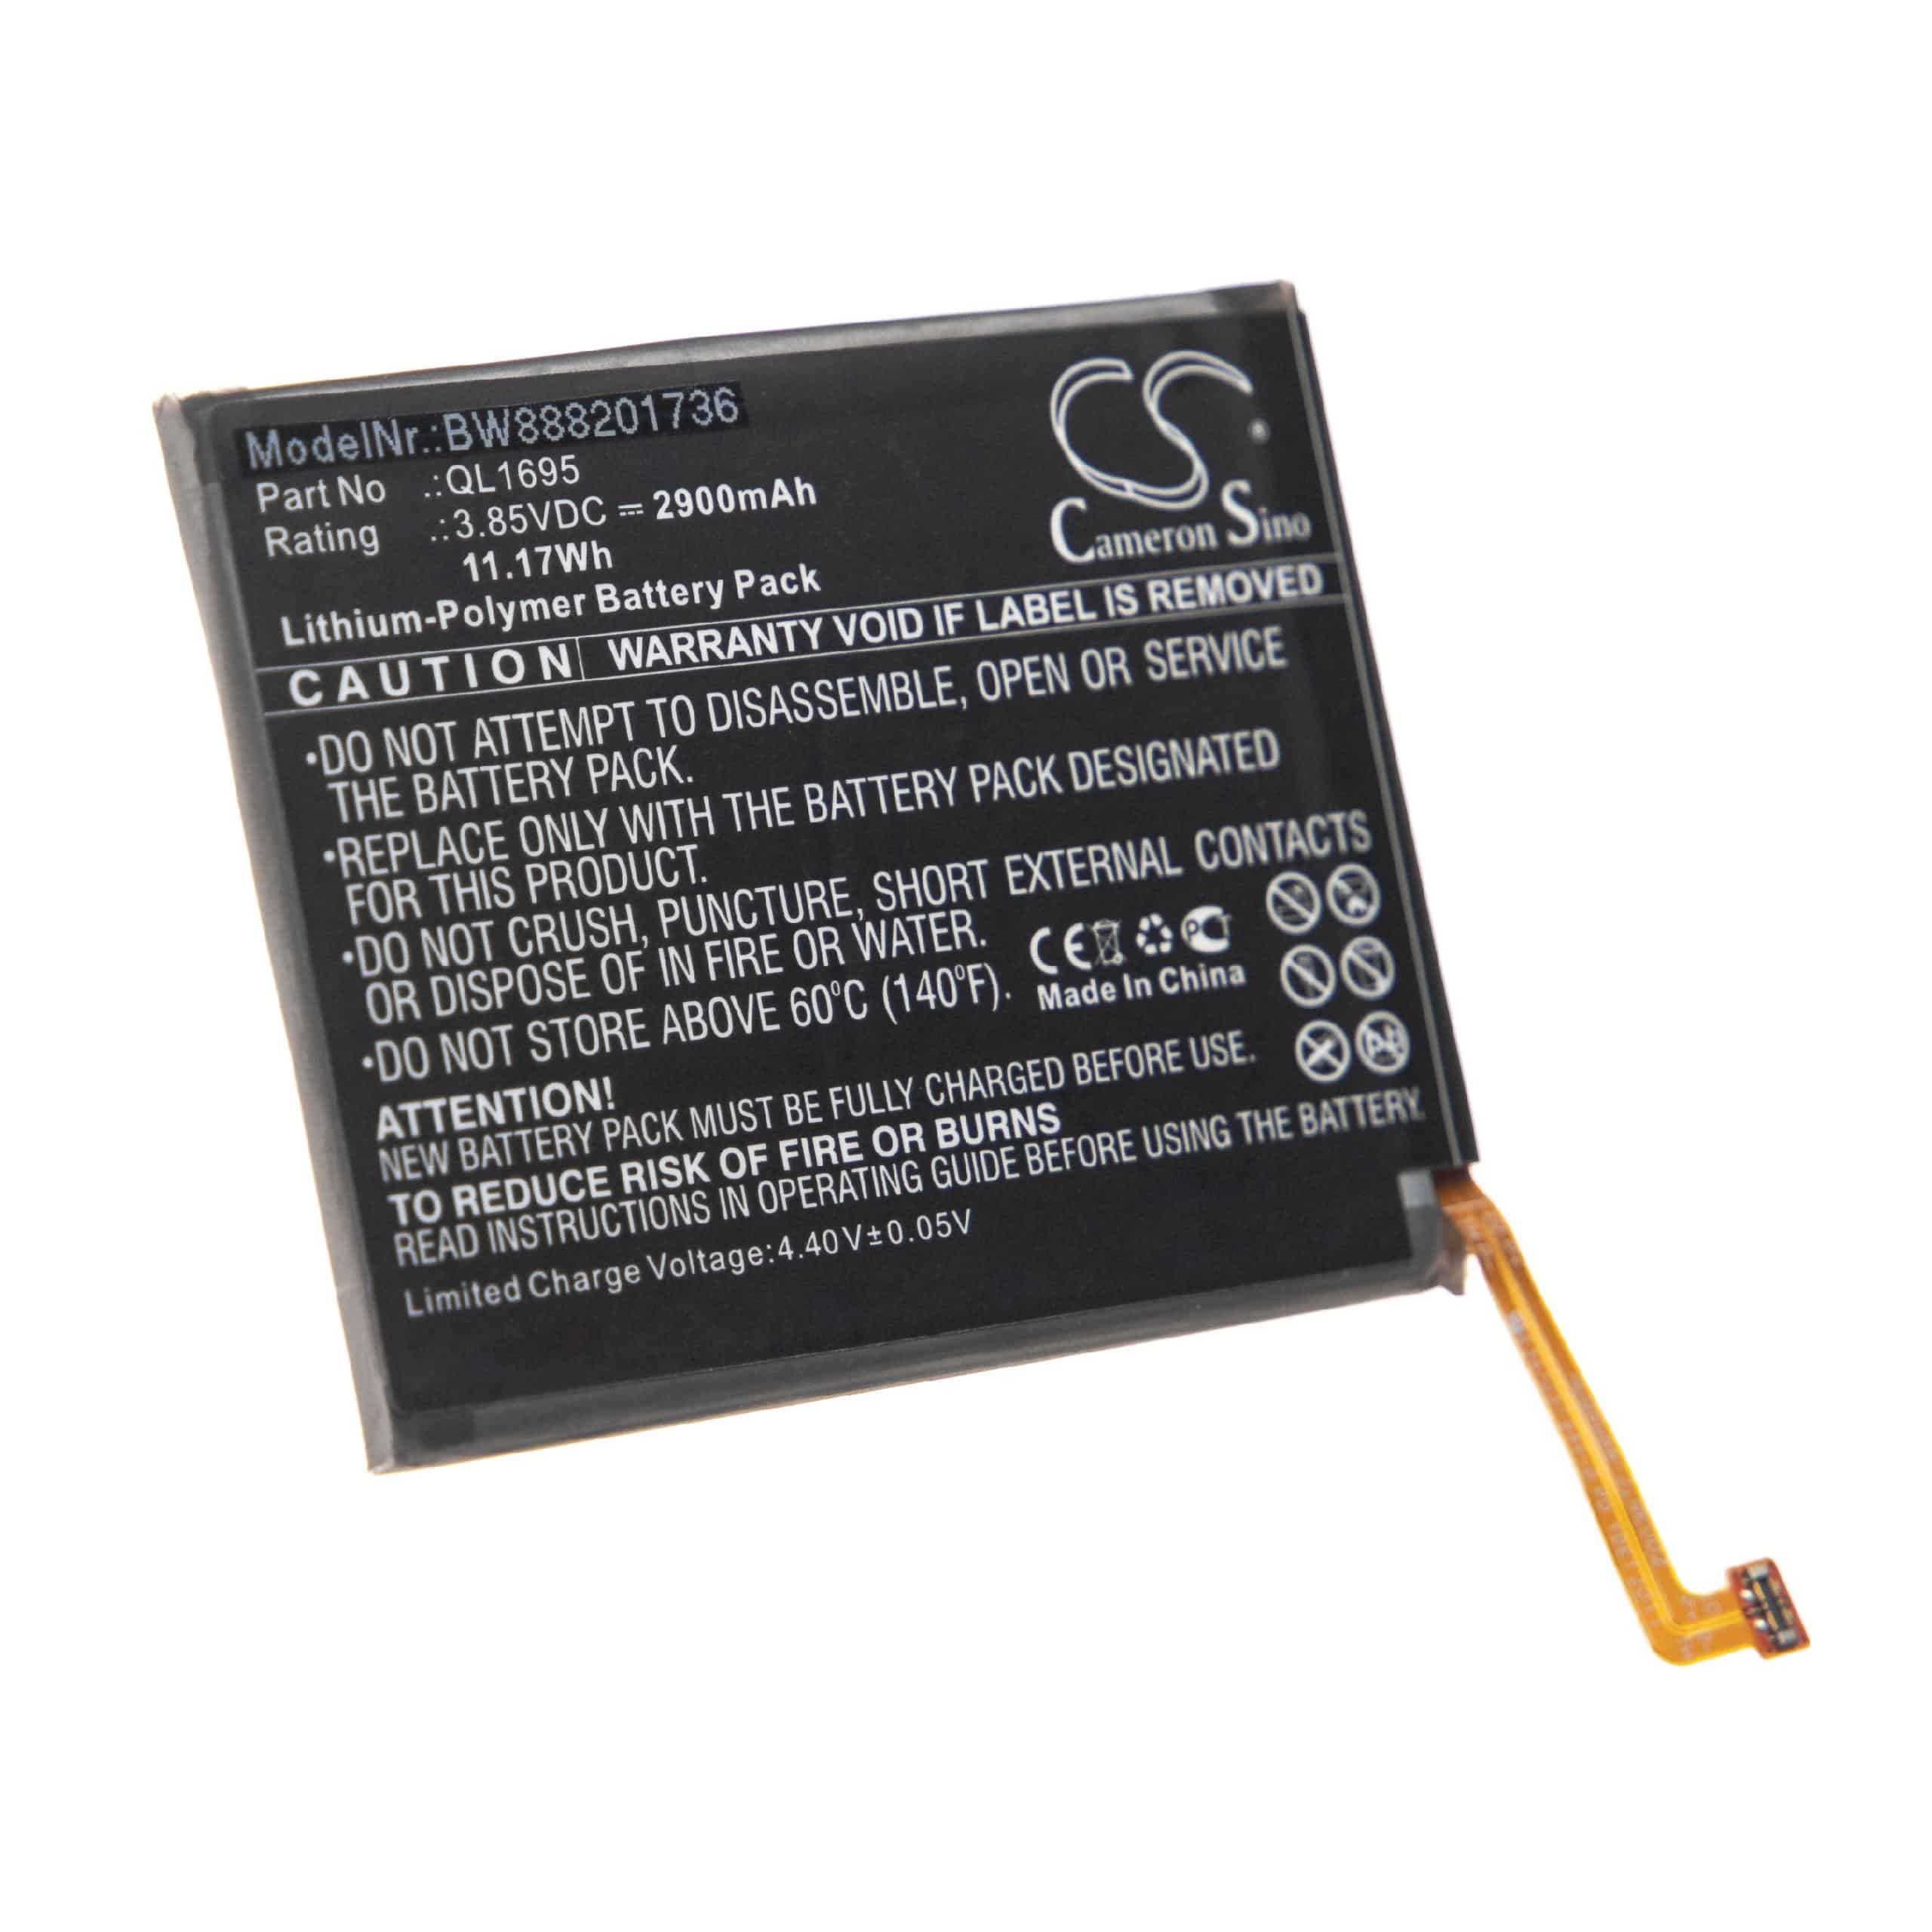 Batería reemplaza Samsung QL1695 para móvil, teléfono Samsung - 2900 mAh 3,85 V Li-poli